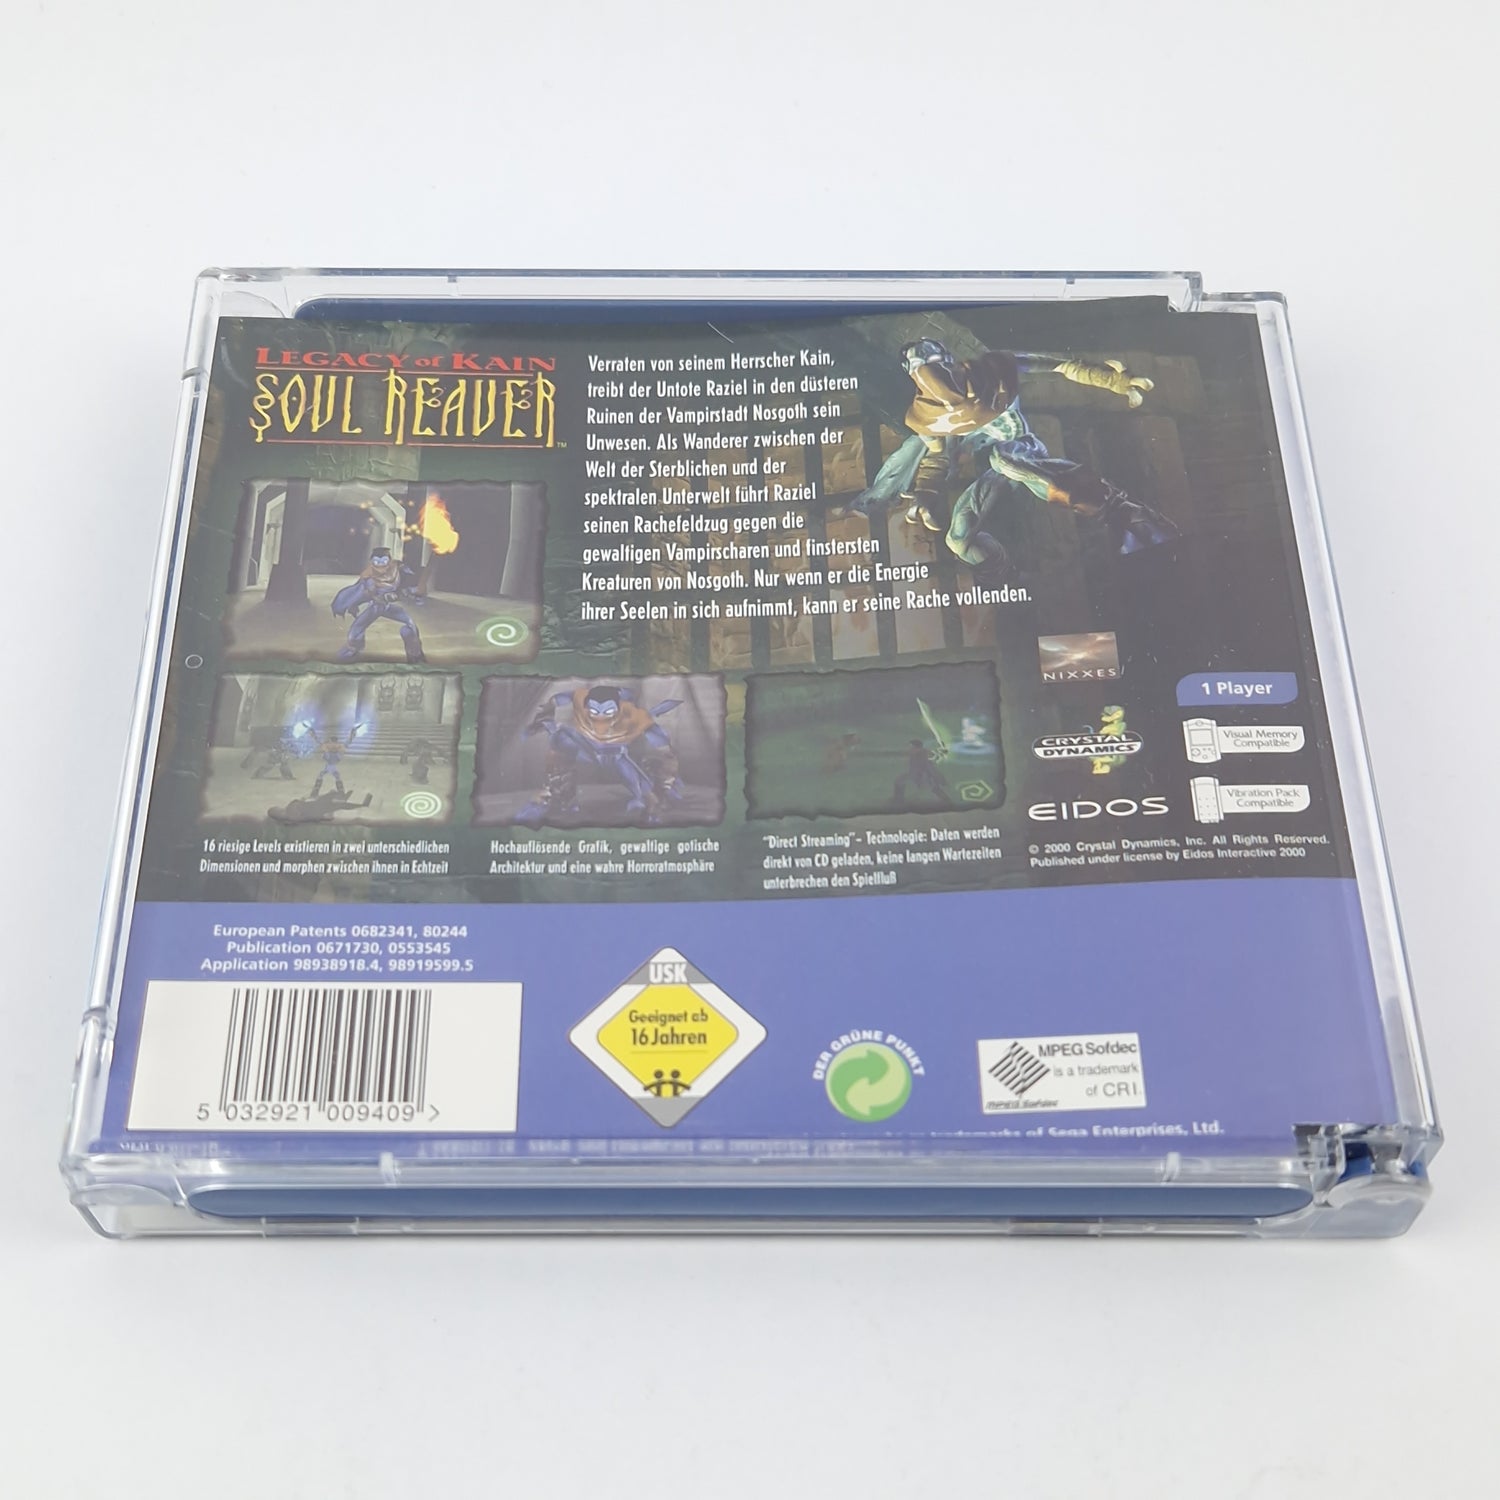 Sega Dreamcast Game: Legacy of Kain Soul Reaver - CD Instructions OVP / PAL DC